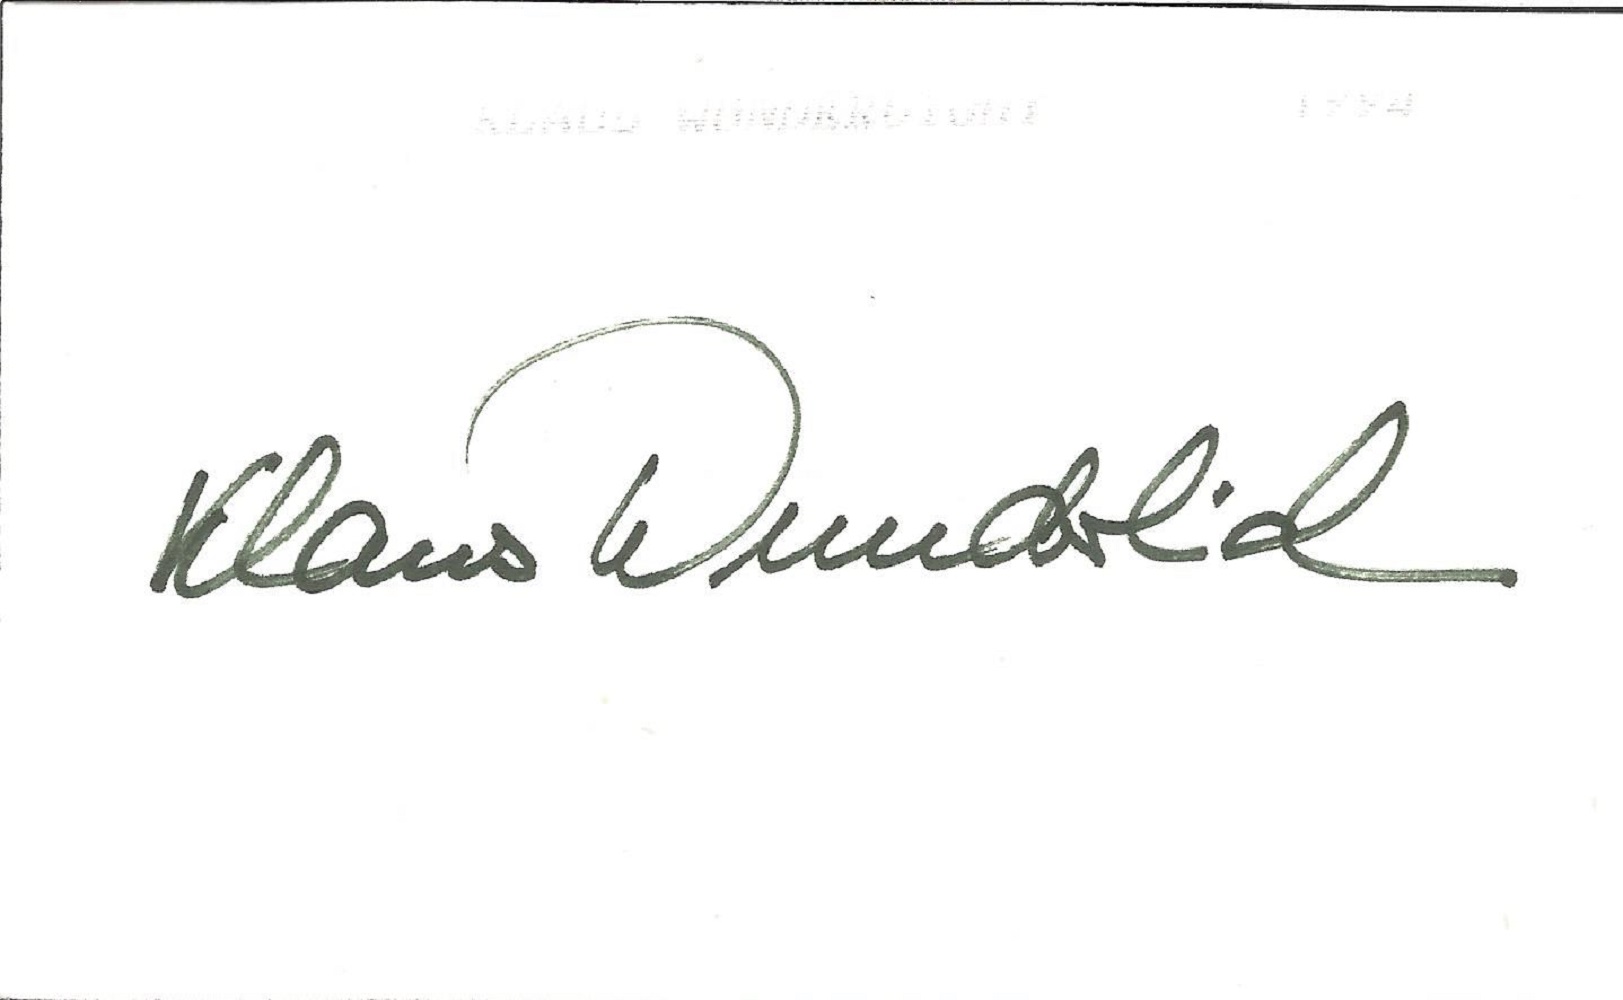 Klaus Wunderlich signed 5x3 white card. Klaus Wunderlich (18 June 1931 - 28 October 1997) was a